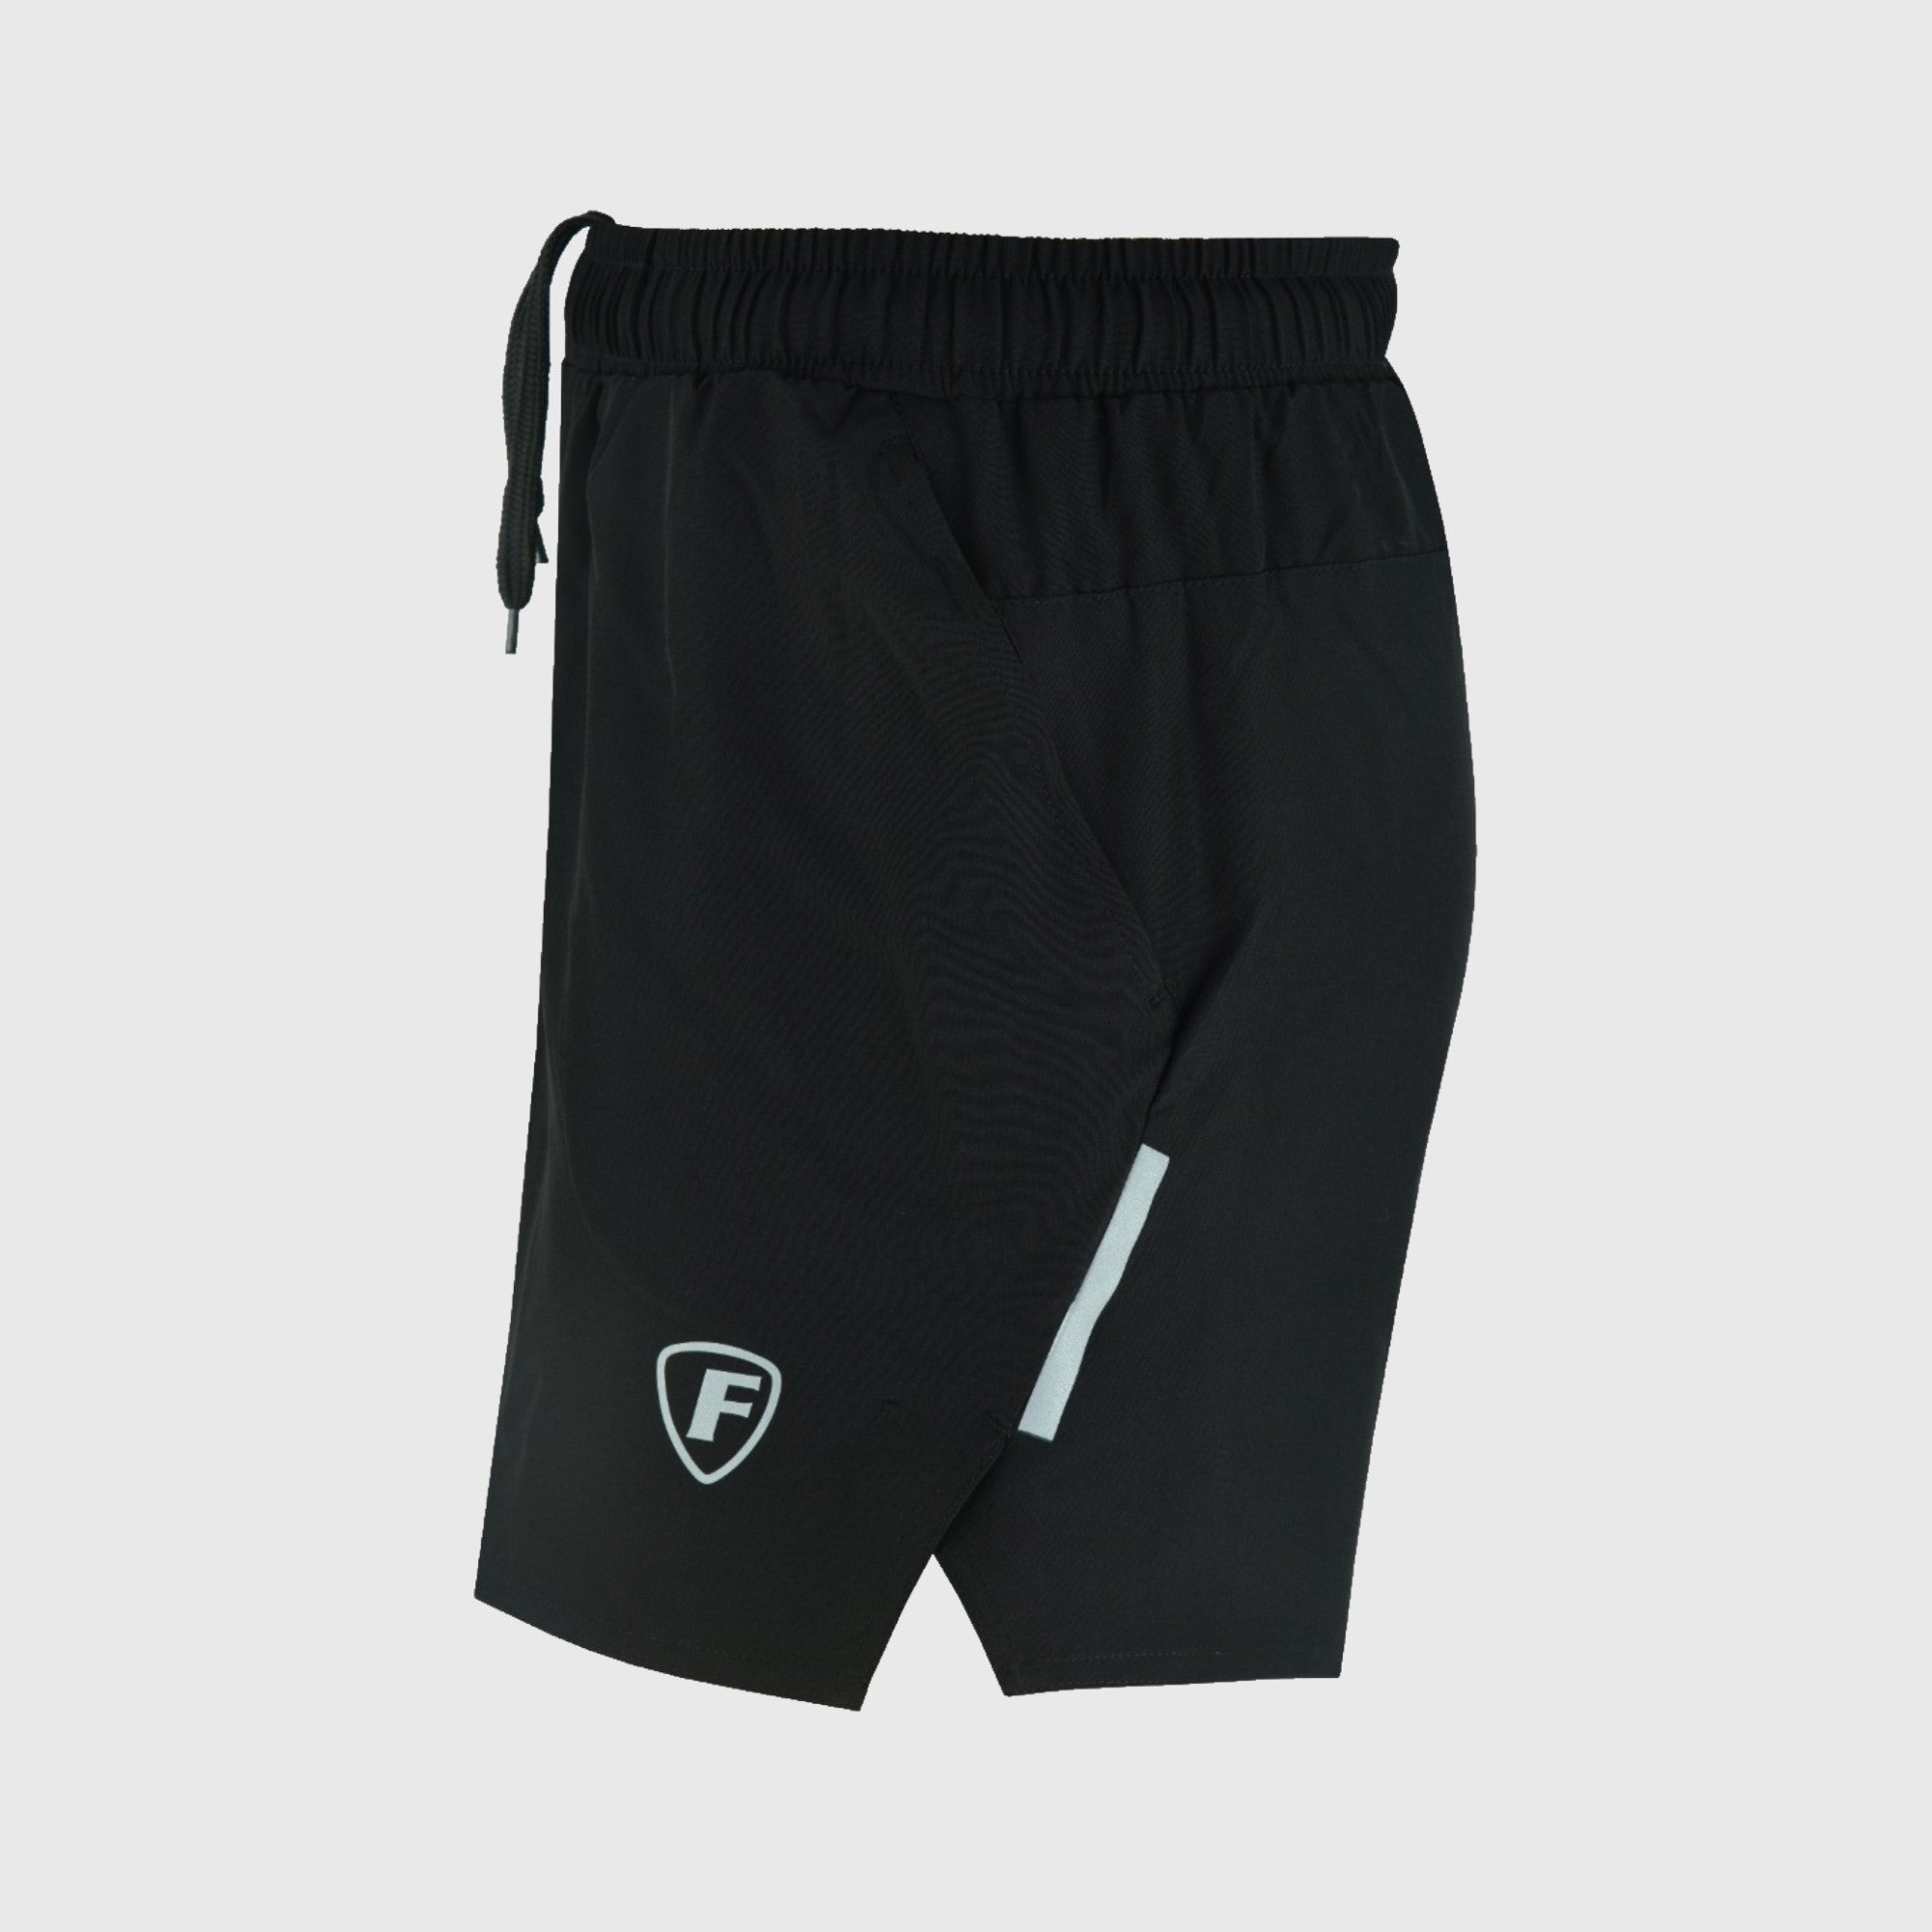 FDX Men's Black Breathable Running Shorts Waist Belt Anti Odor Moisture Wicking & Perfect for Trekking, Tennis, squash & Gym Sports & Outdoor